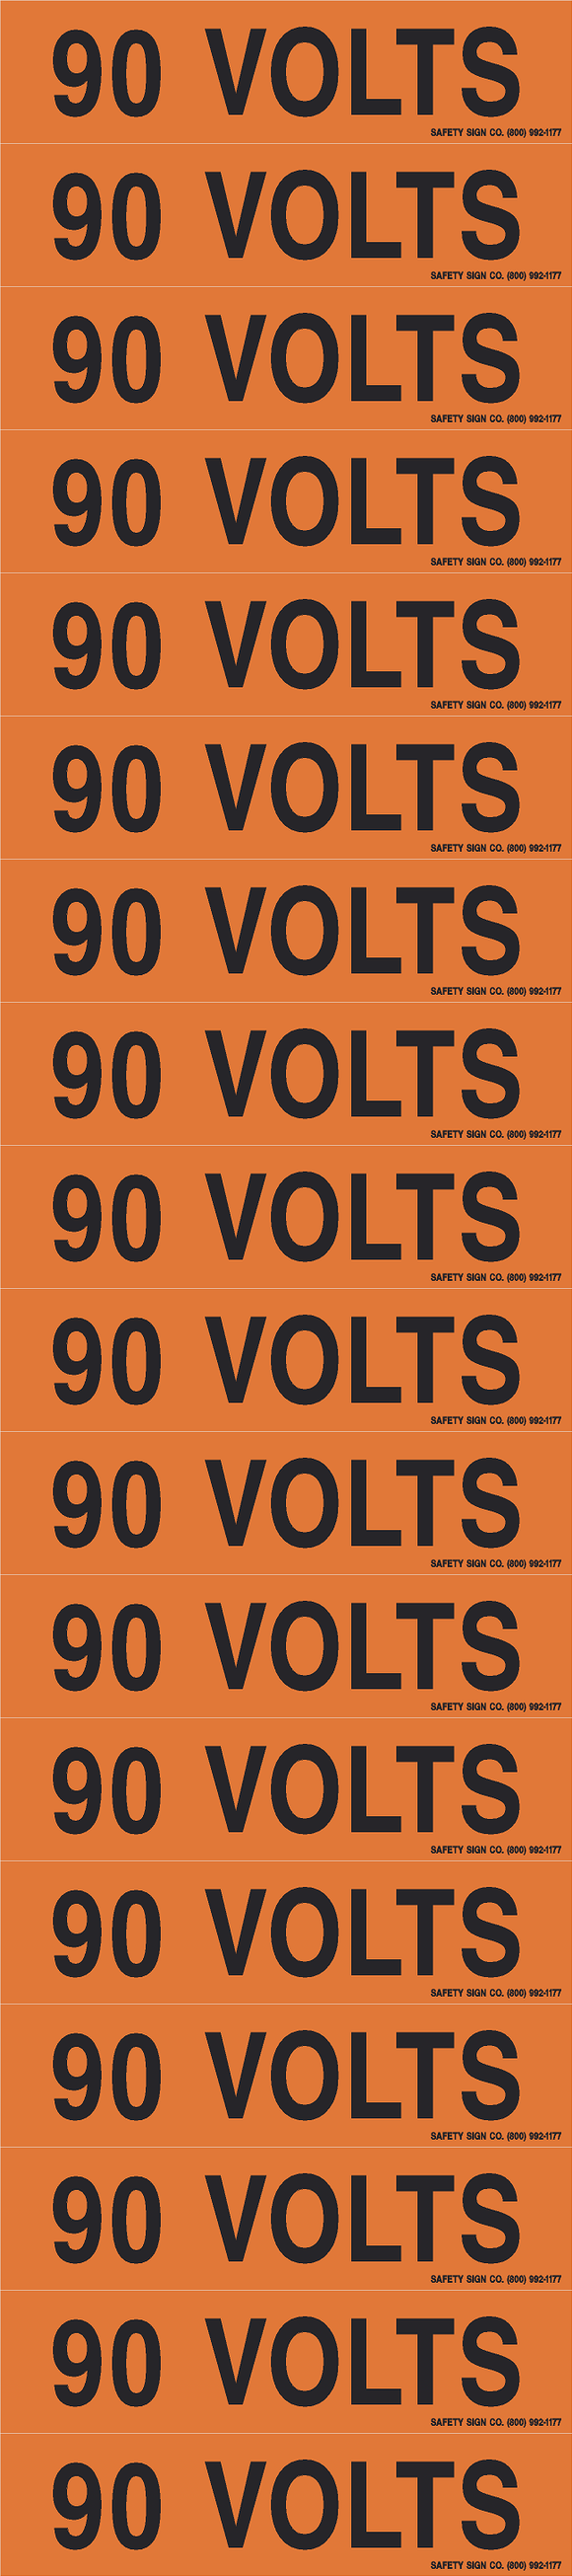 90 VOLTS PIMAR® Vinyl Press On Label (10 PACK)